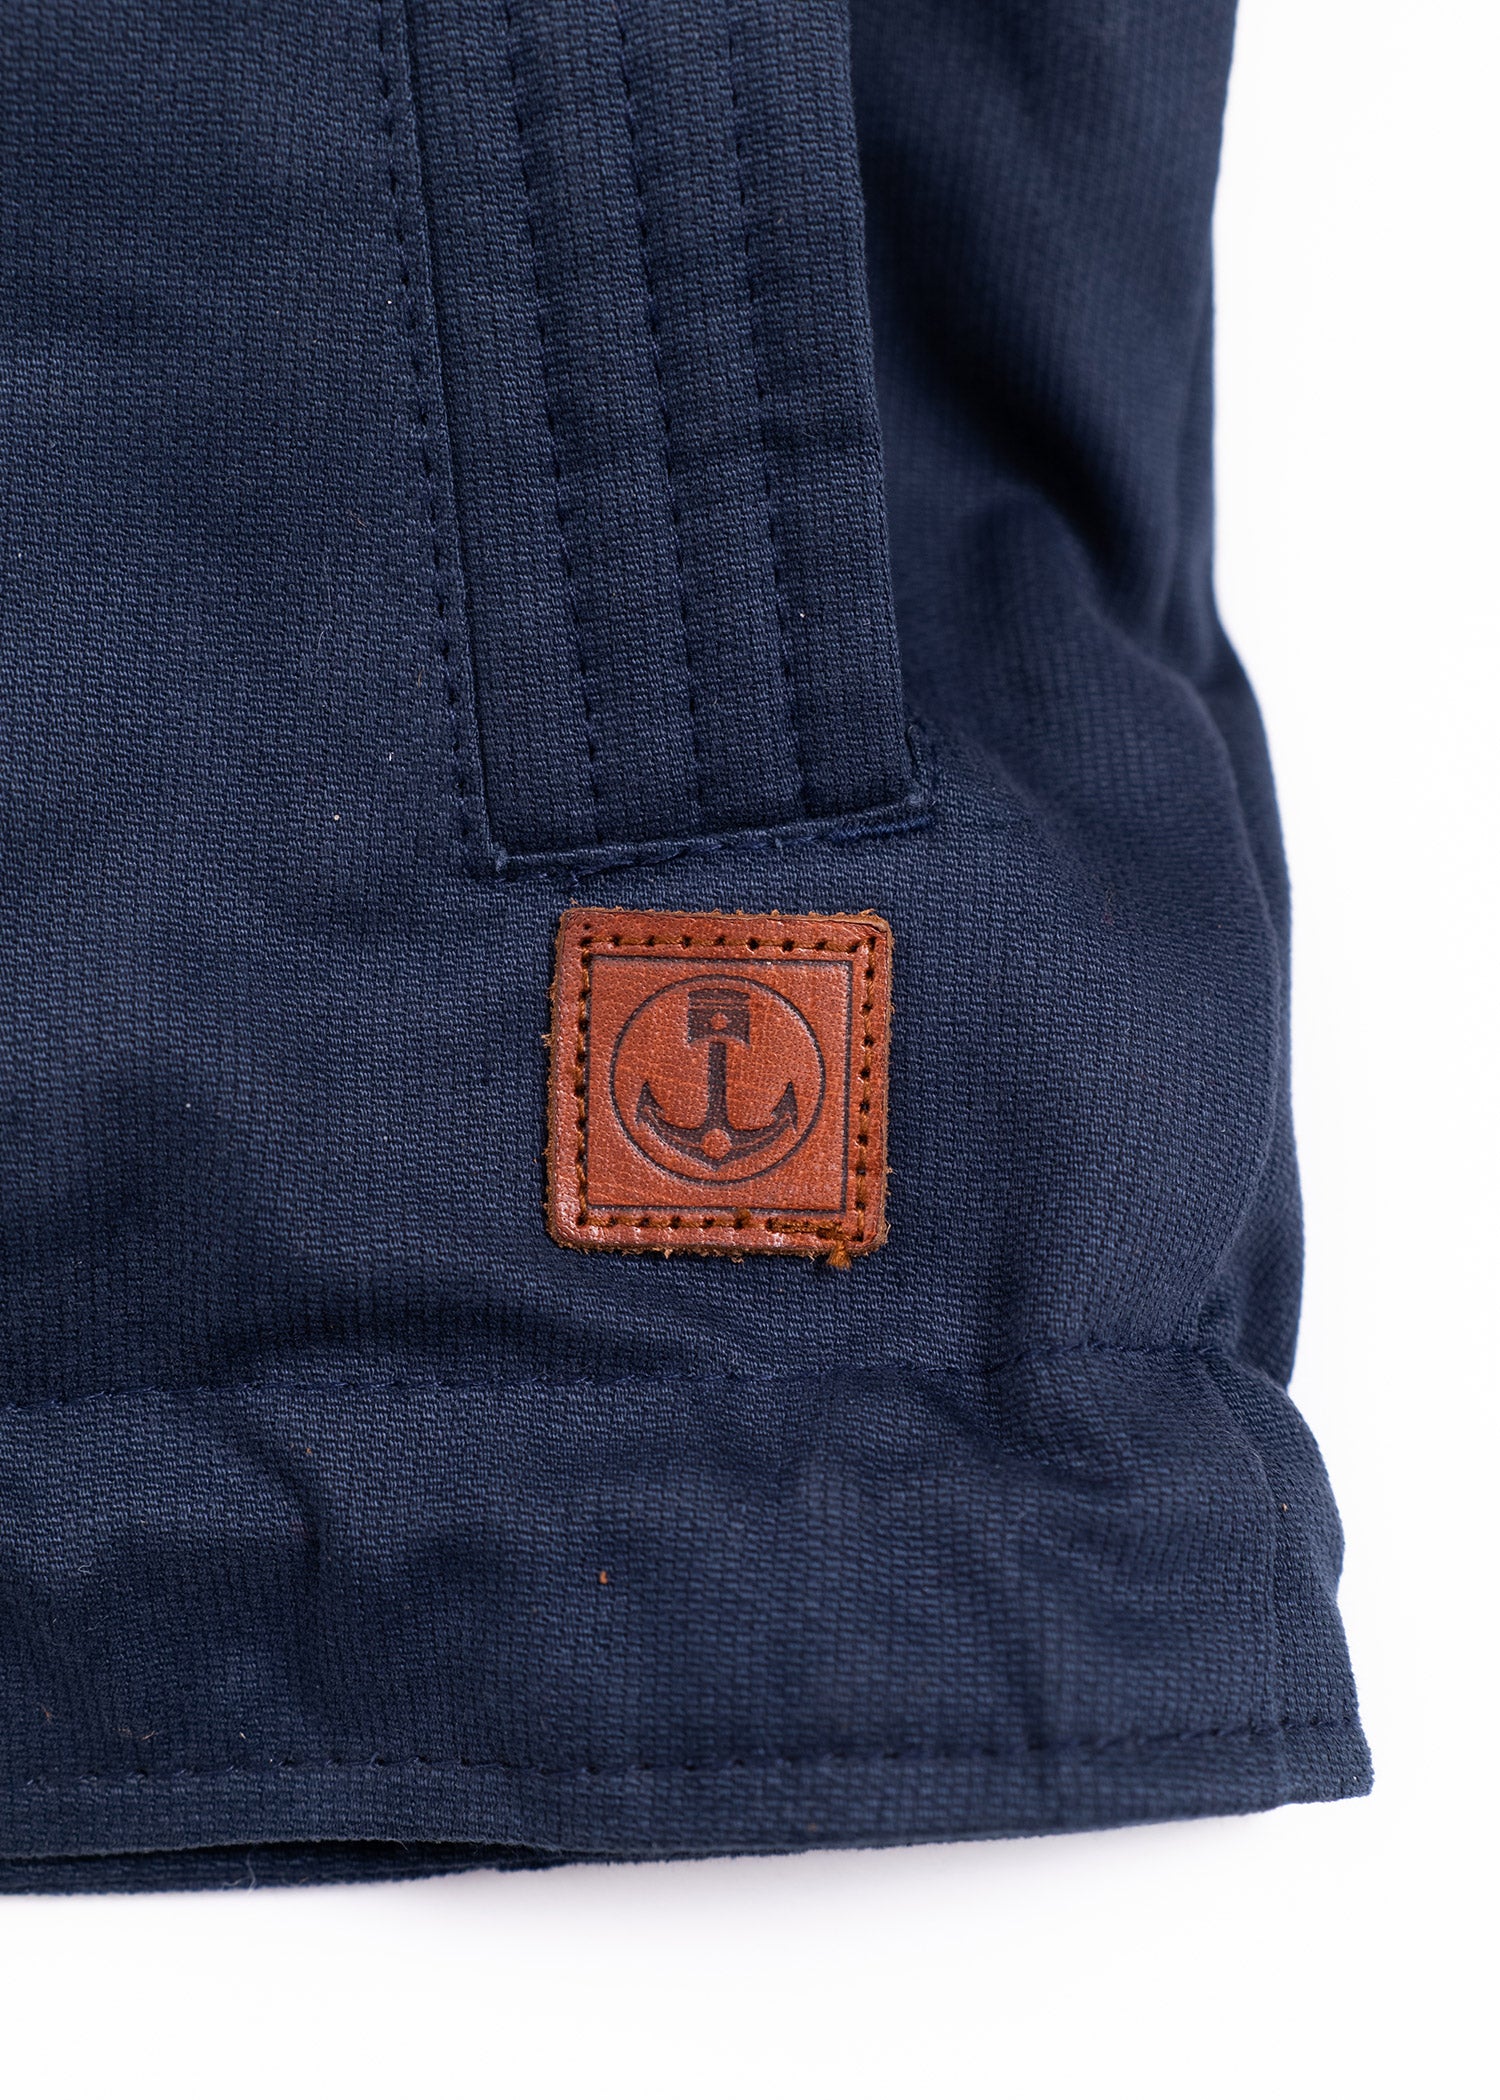 Water Resistant Coach Jacket – Nautilus Apparel Company